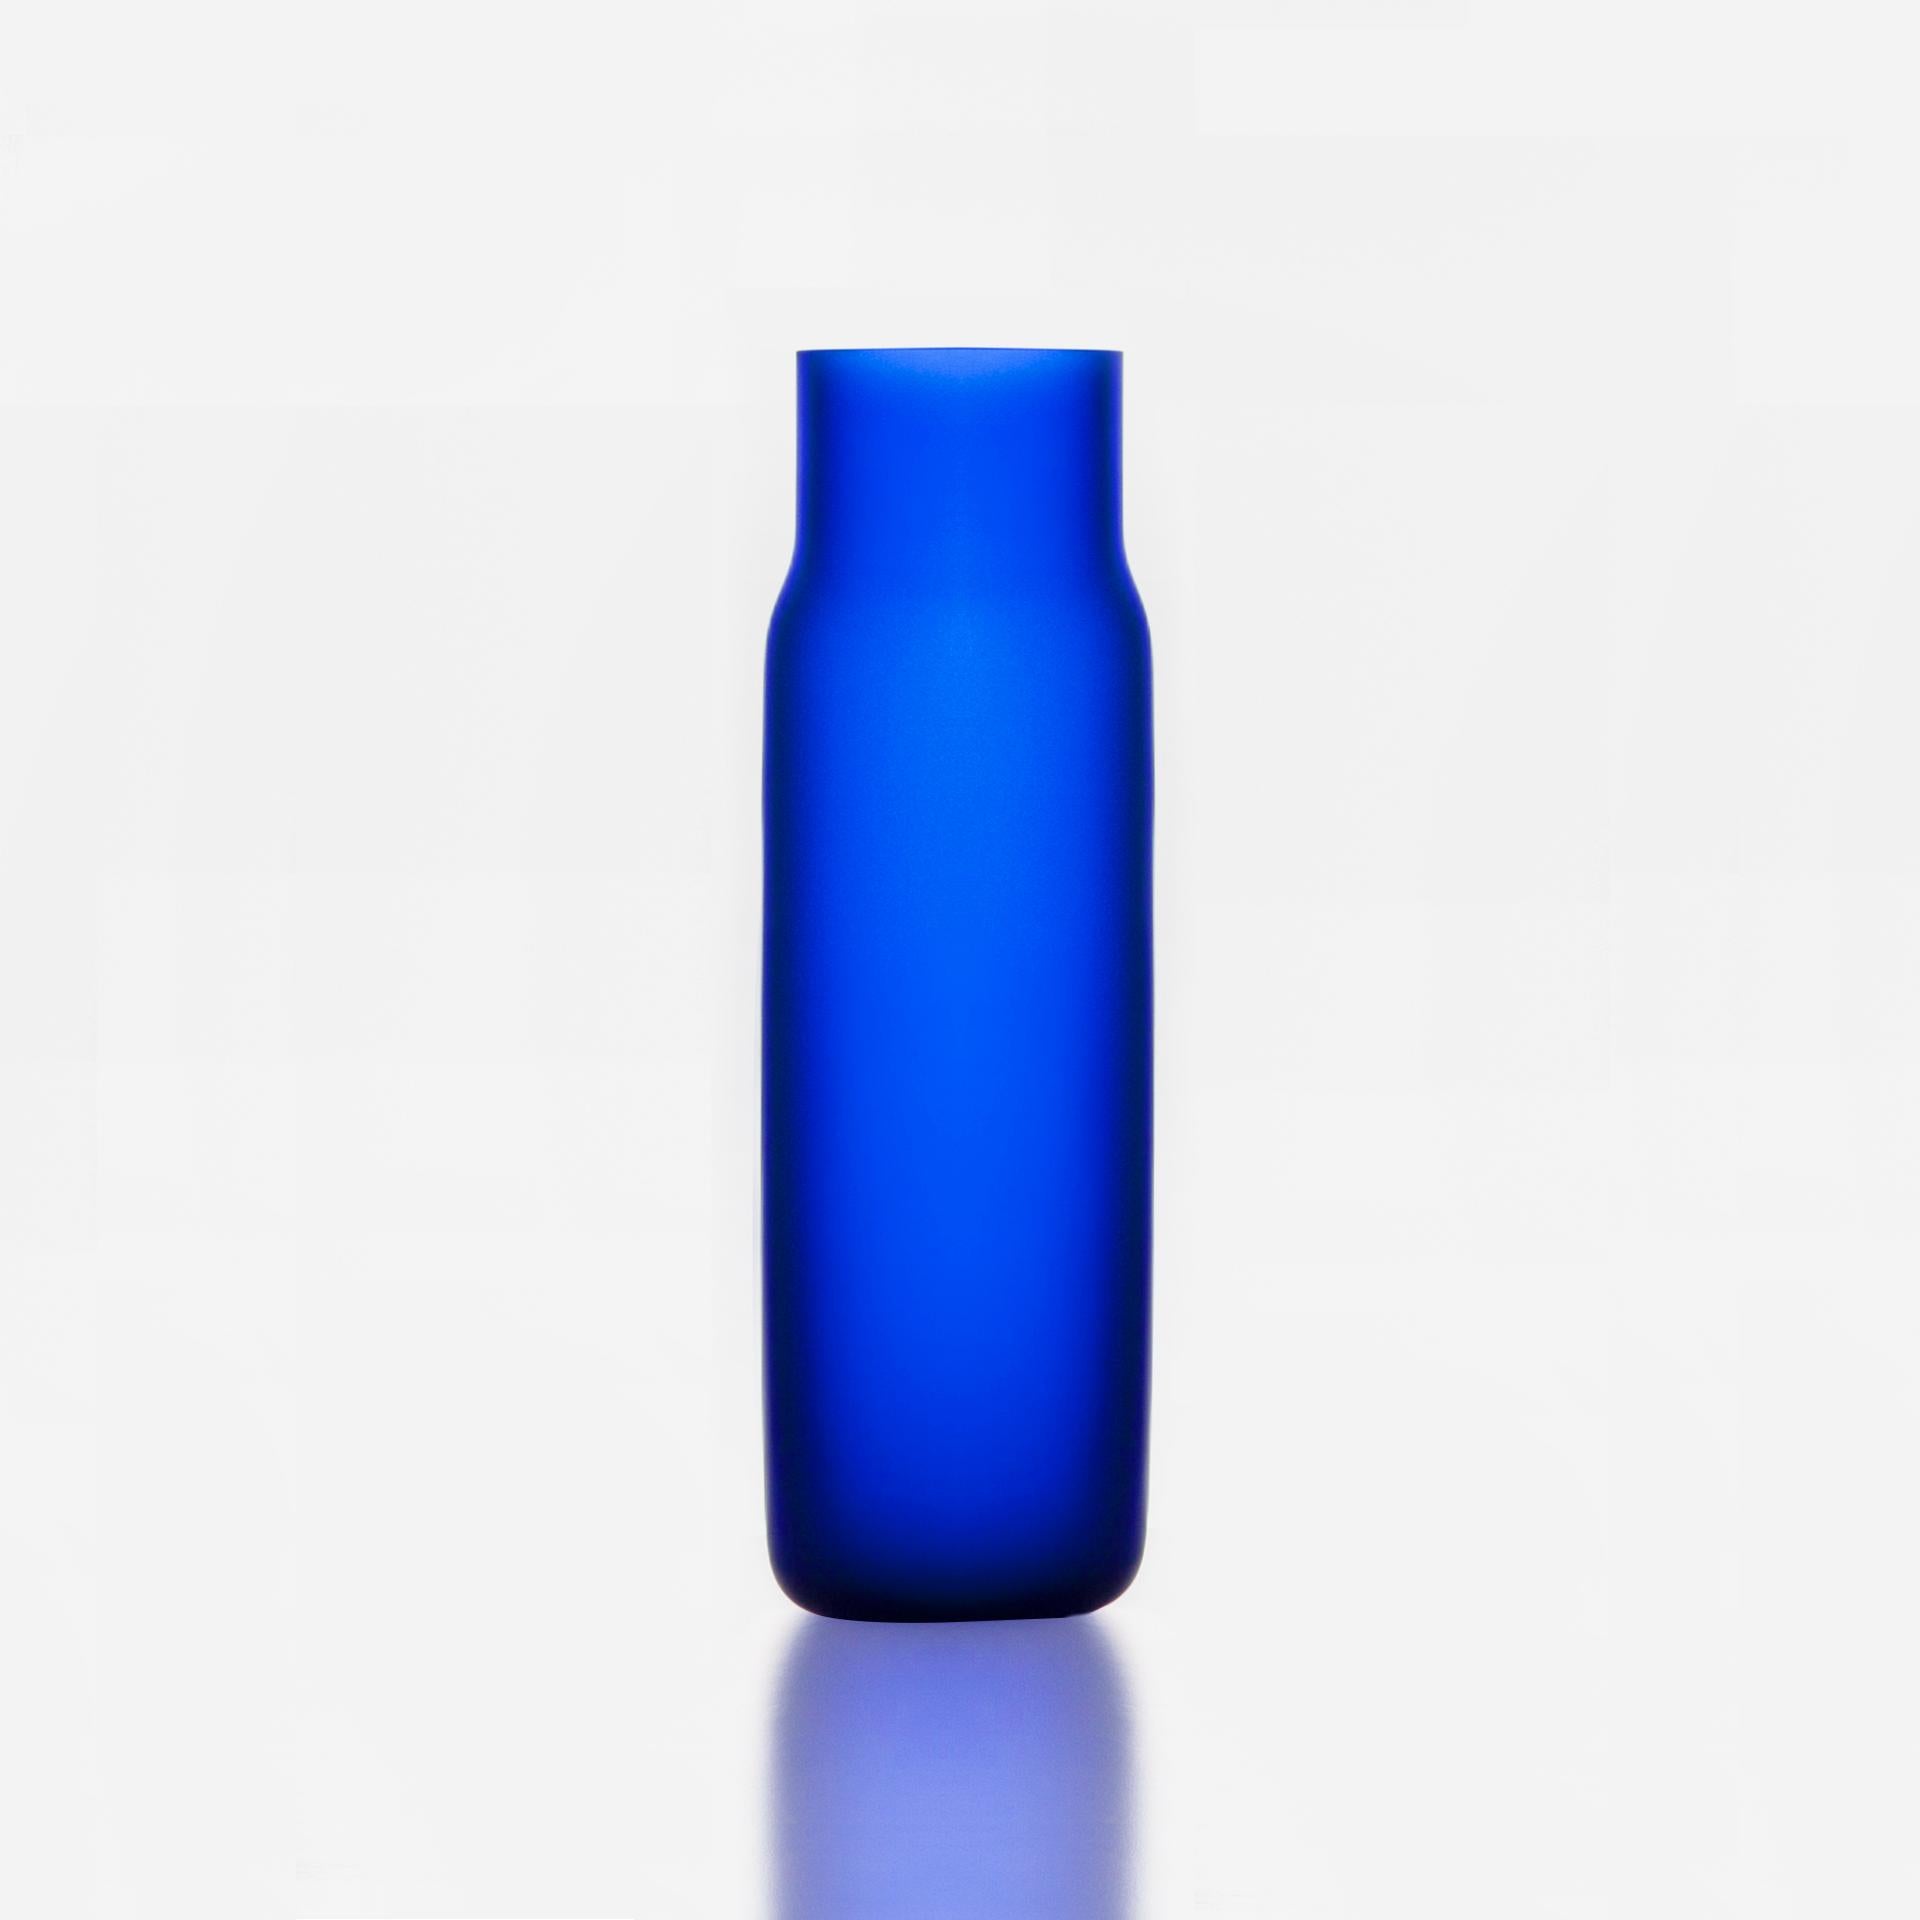 Tall Blue Bandaska Matte vase by Dechem Studio.
Dimensions: D 9 x H 31 cm.
Materials: glass.
Available in 4 sizes: D15 x H25/ D18 x H24/ D9 x W31/ D22 x H33 cm.
Available in black, uranium yellow, dark blue.

Hand-blown into beech wood mold,